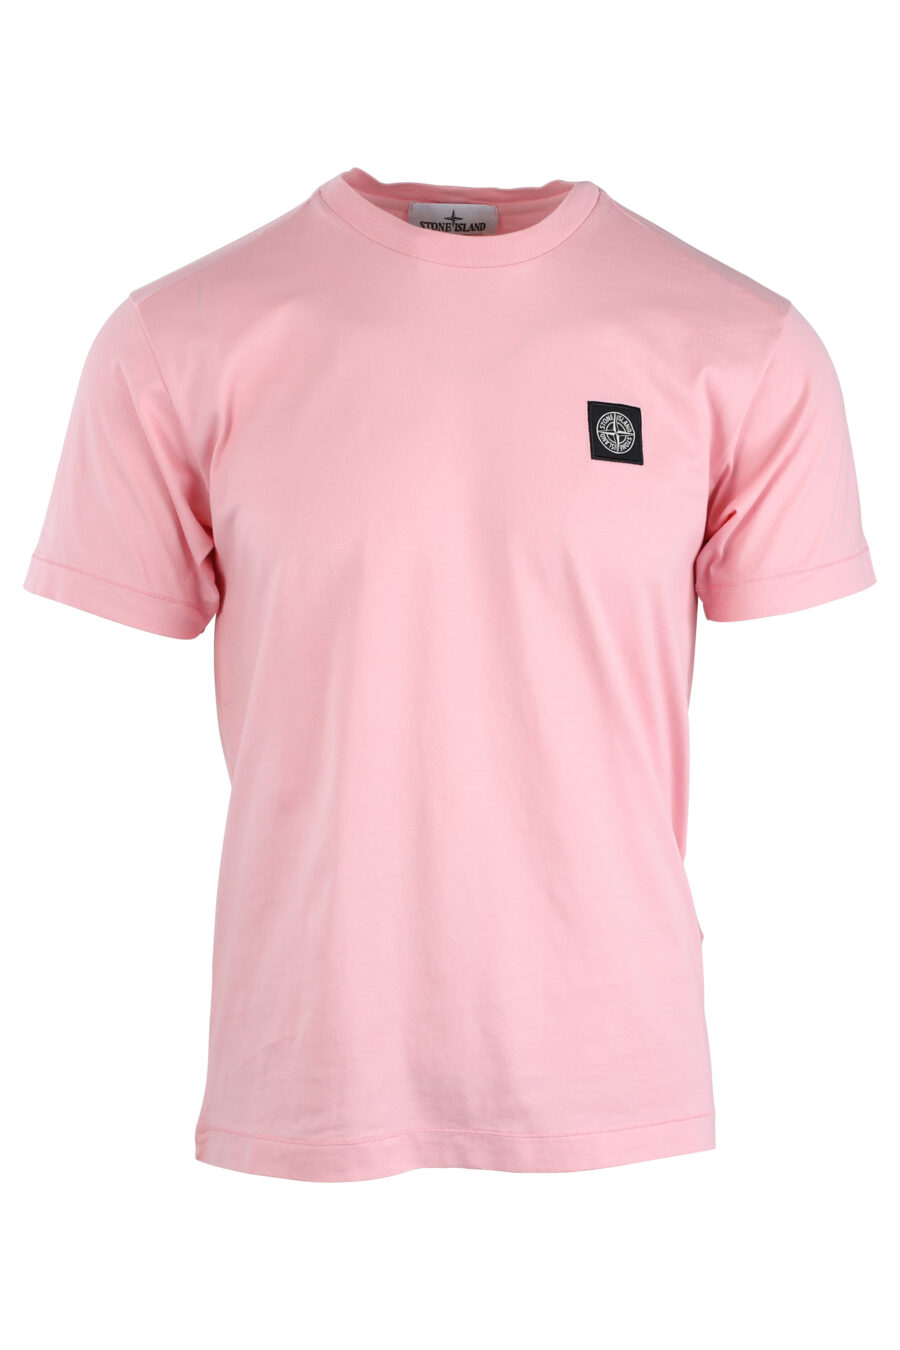 Camiseta rosa con minilogo parche - IMG 1693